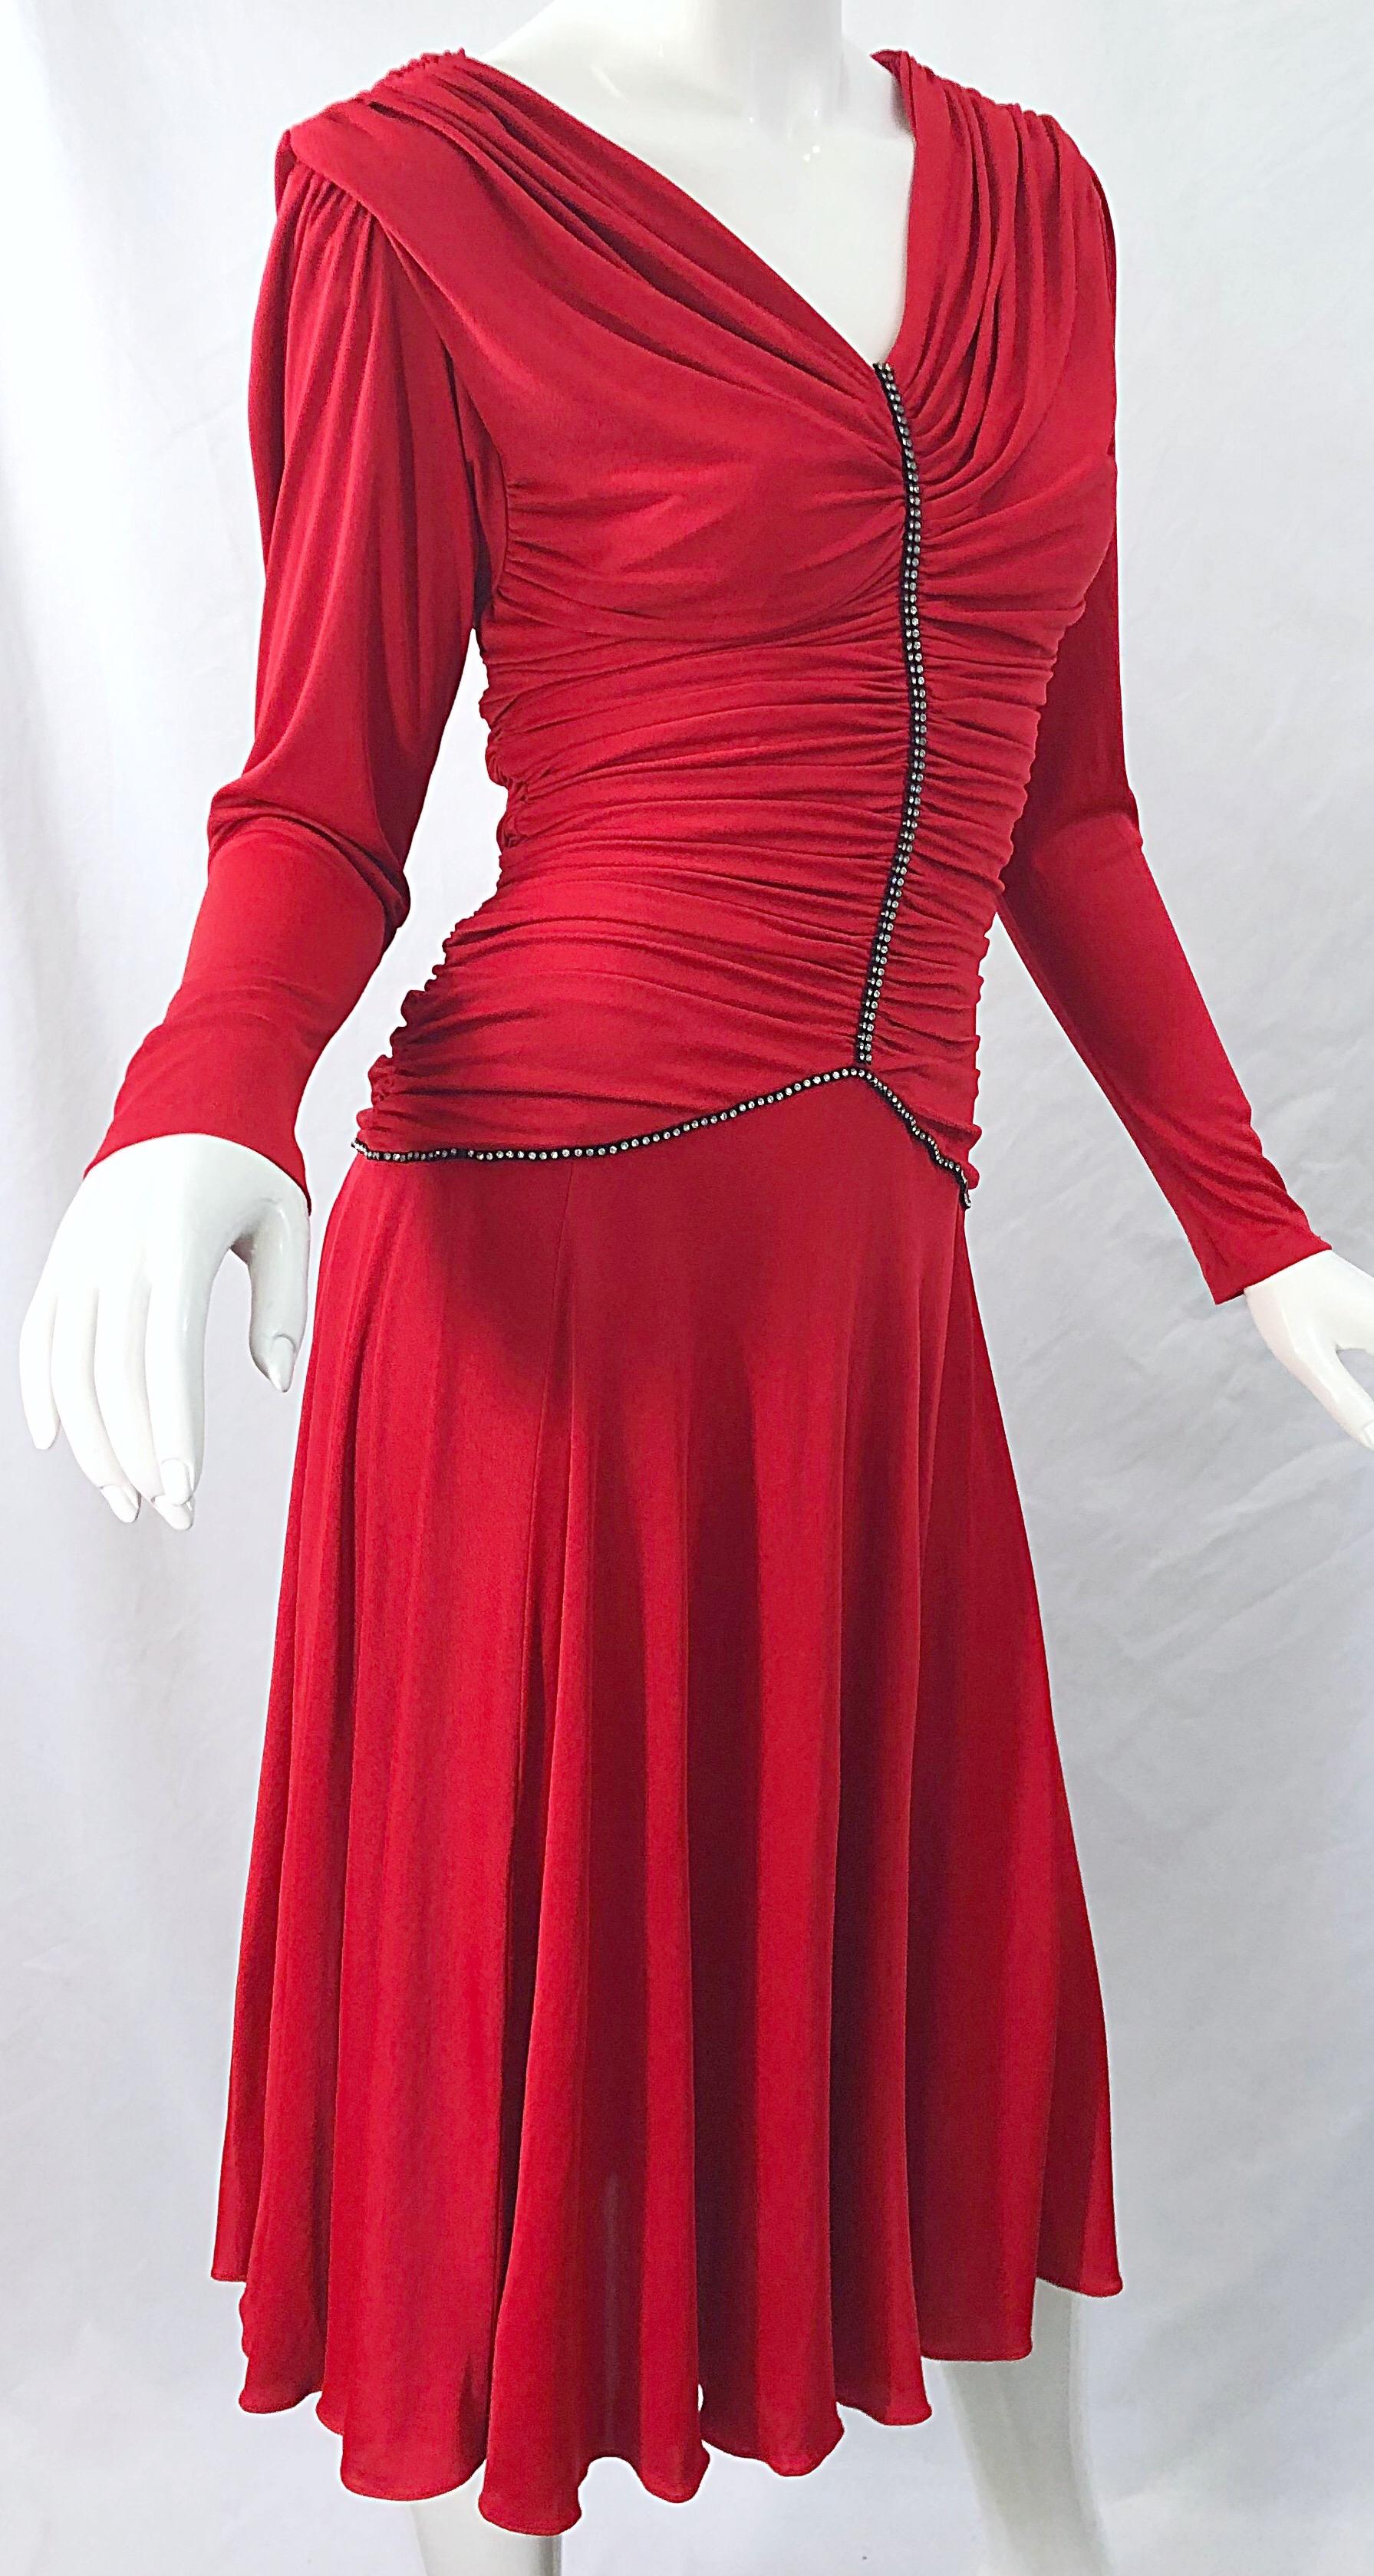 1970s Claraluna Original Lipstick Red Rhinestone Slinky Jersey Vintage 70s Dress For Sale 1